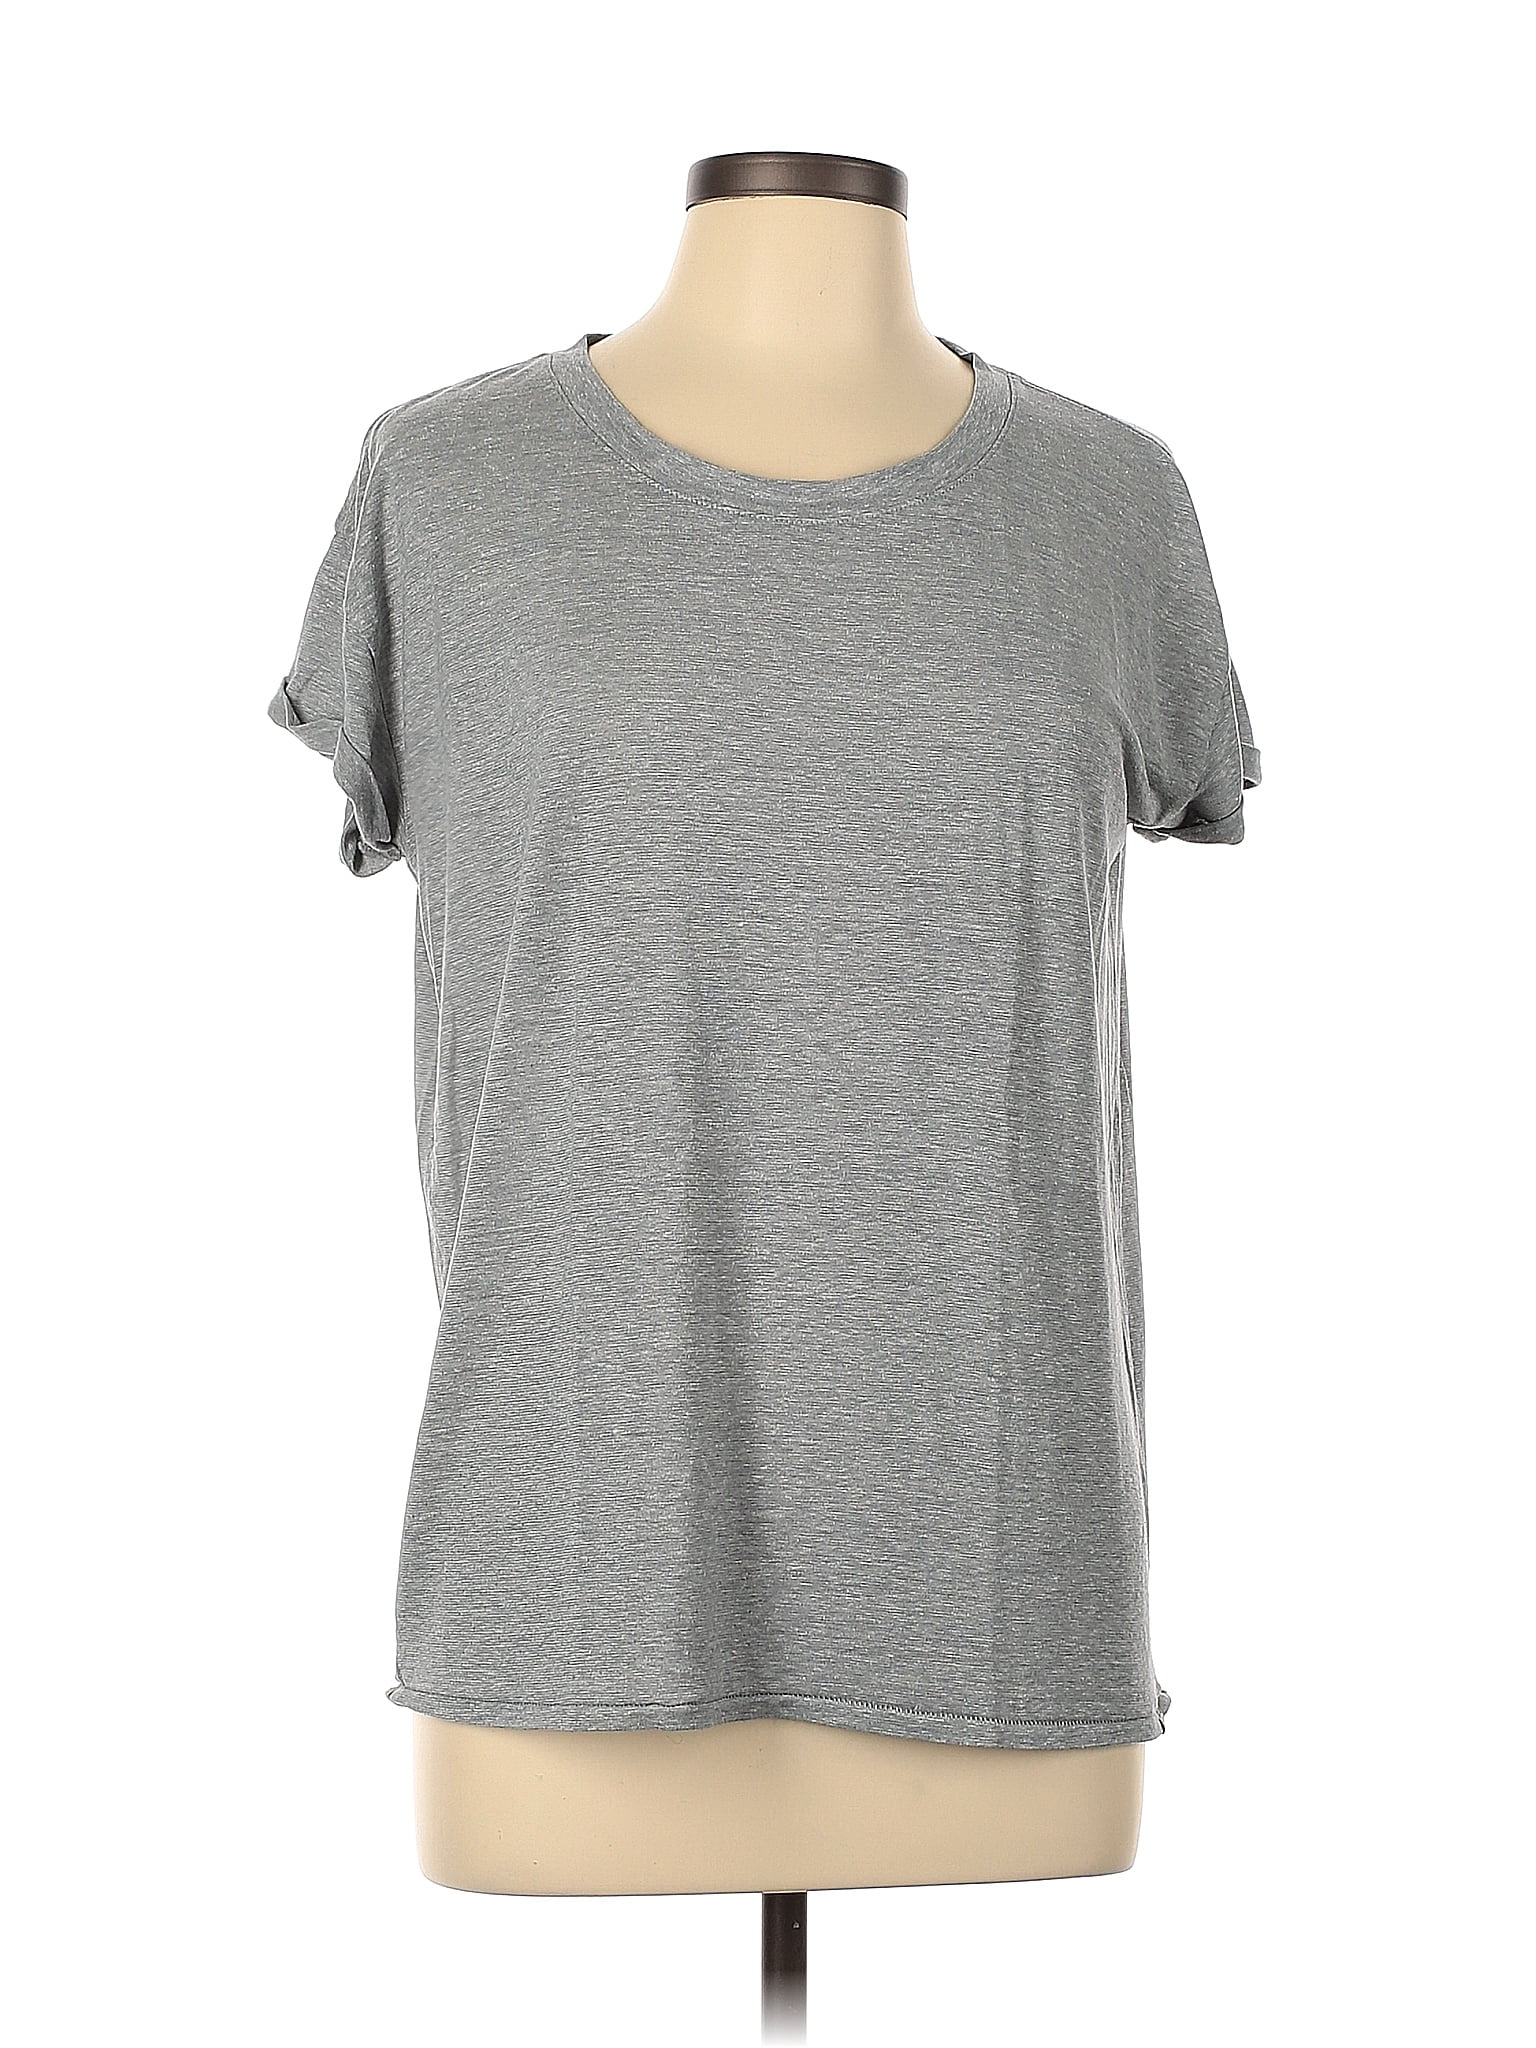 PrAna Gray Short Sleeve T-Shirt Size L - 42% off | thredUP